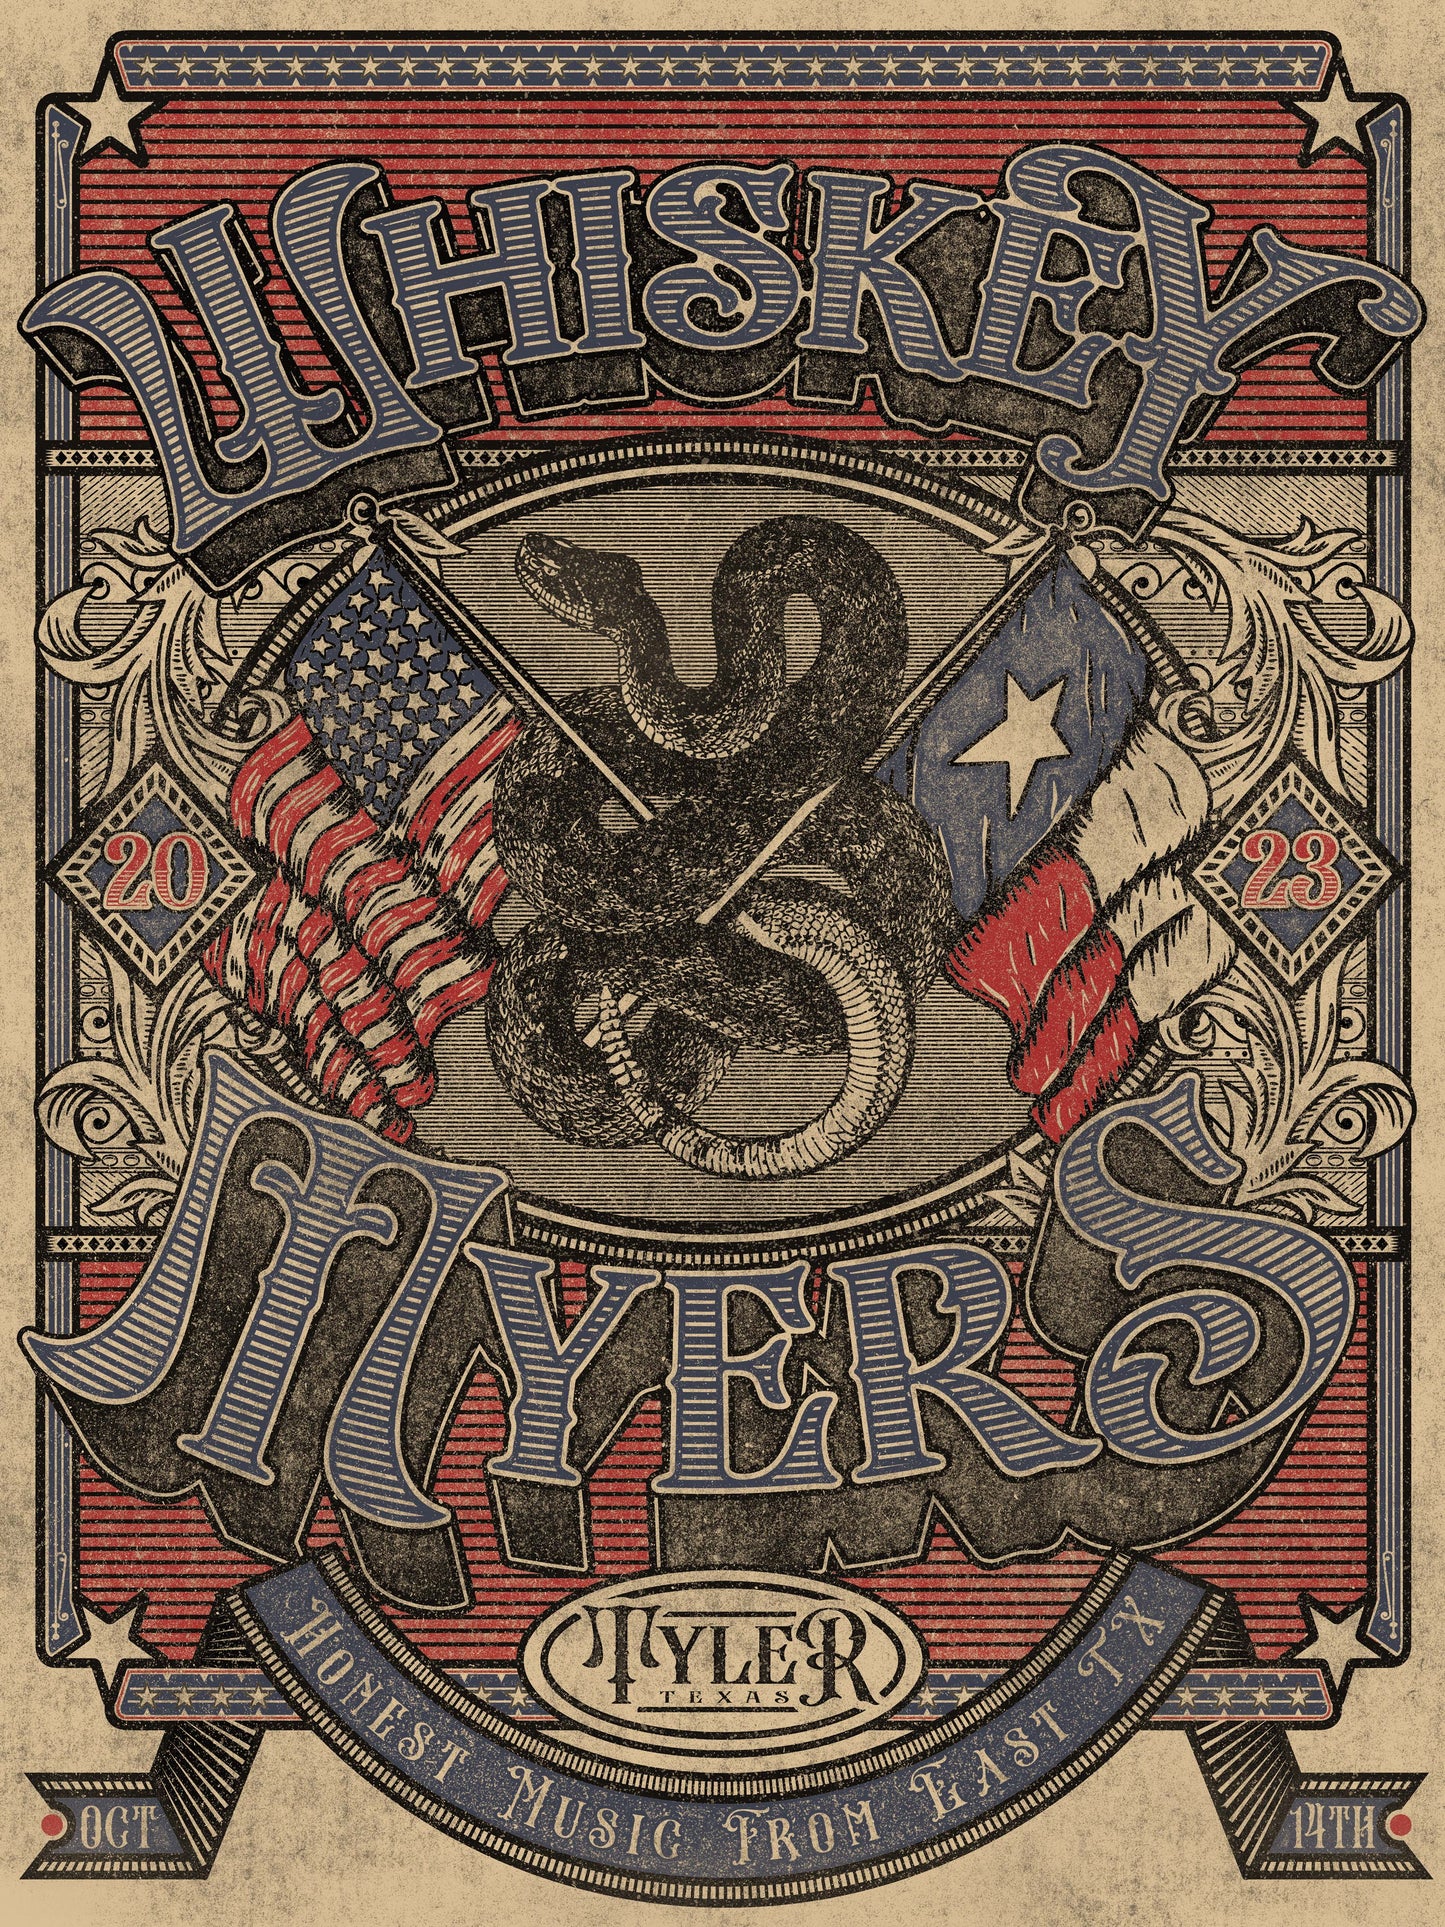 C34 | WHISKEY MYERS | TYLER TX | SHOW